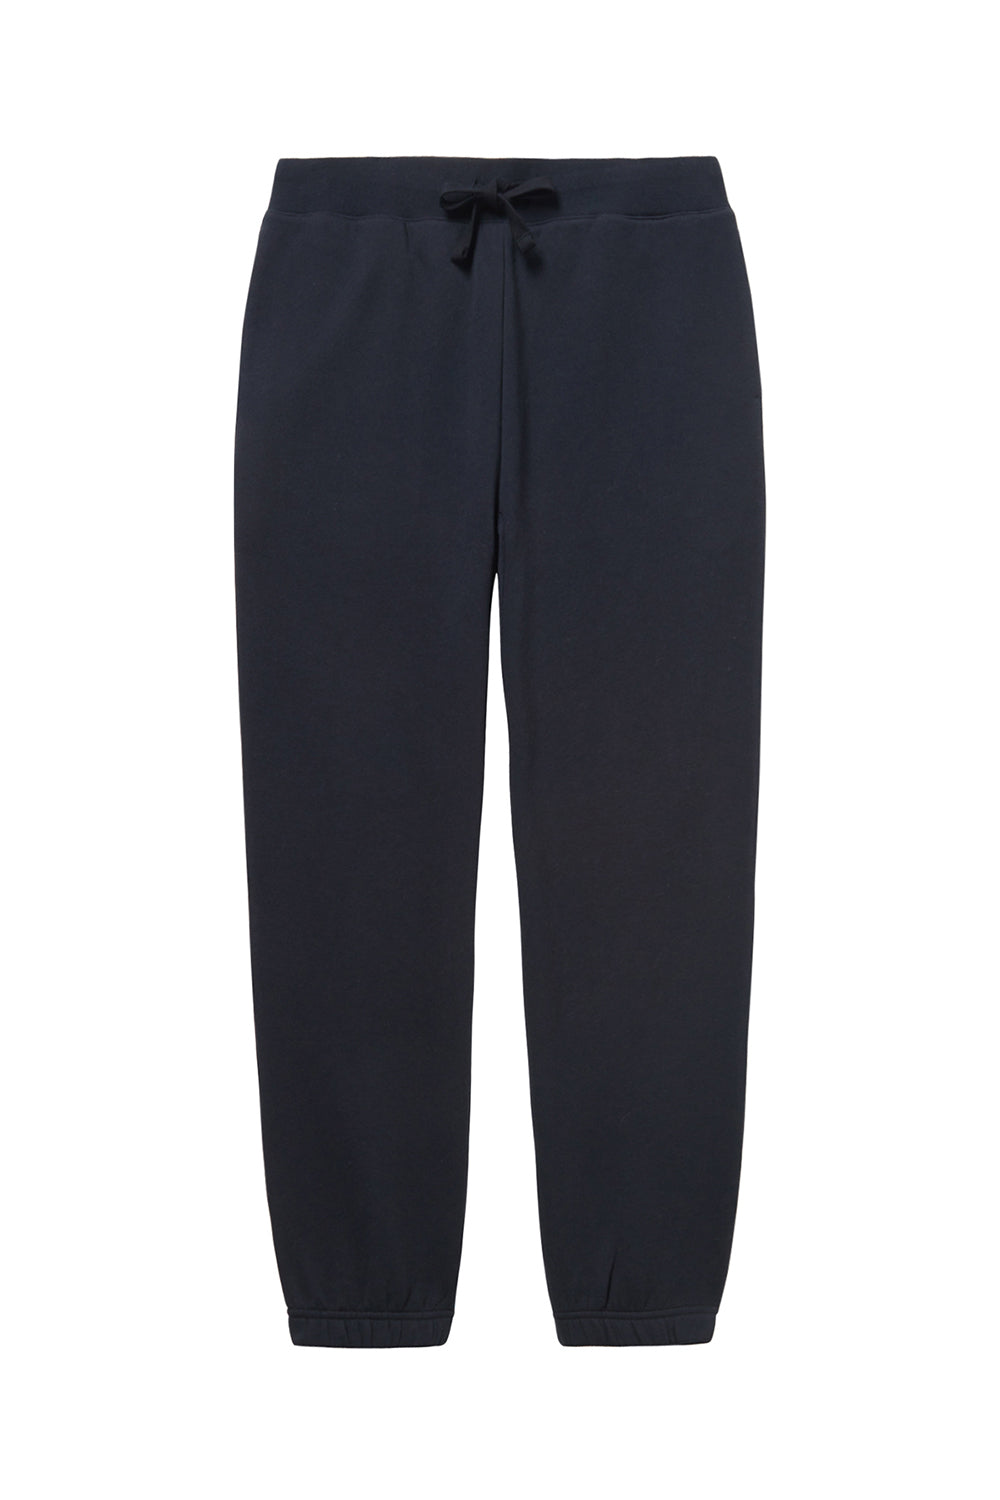 Alternative 8803PF Mens Eco Cozy Fleece Sweatpants w/ Pockets Black Flat Front